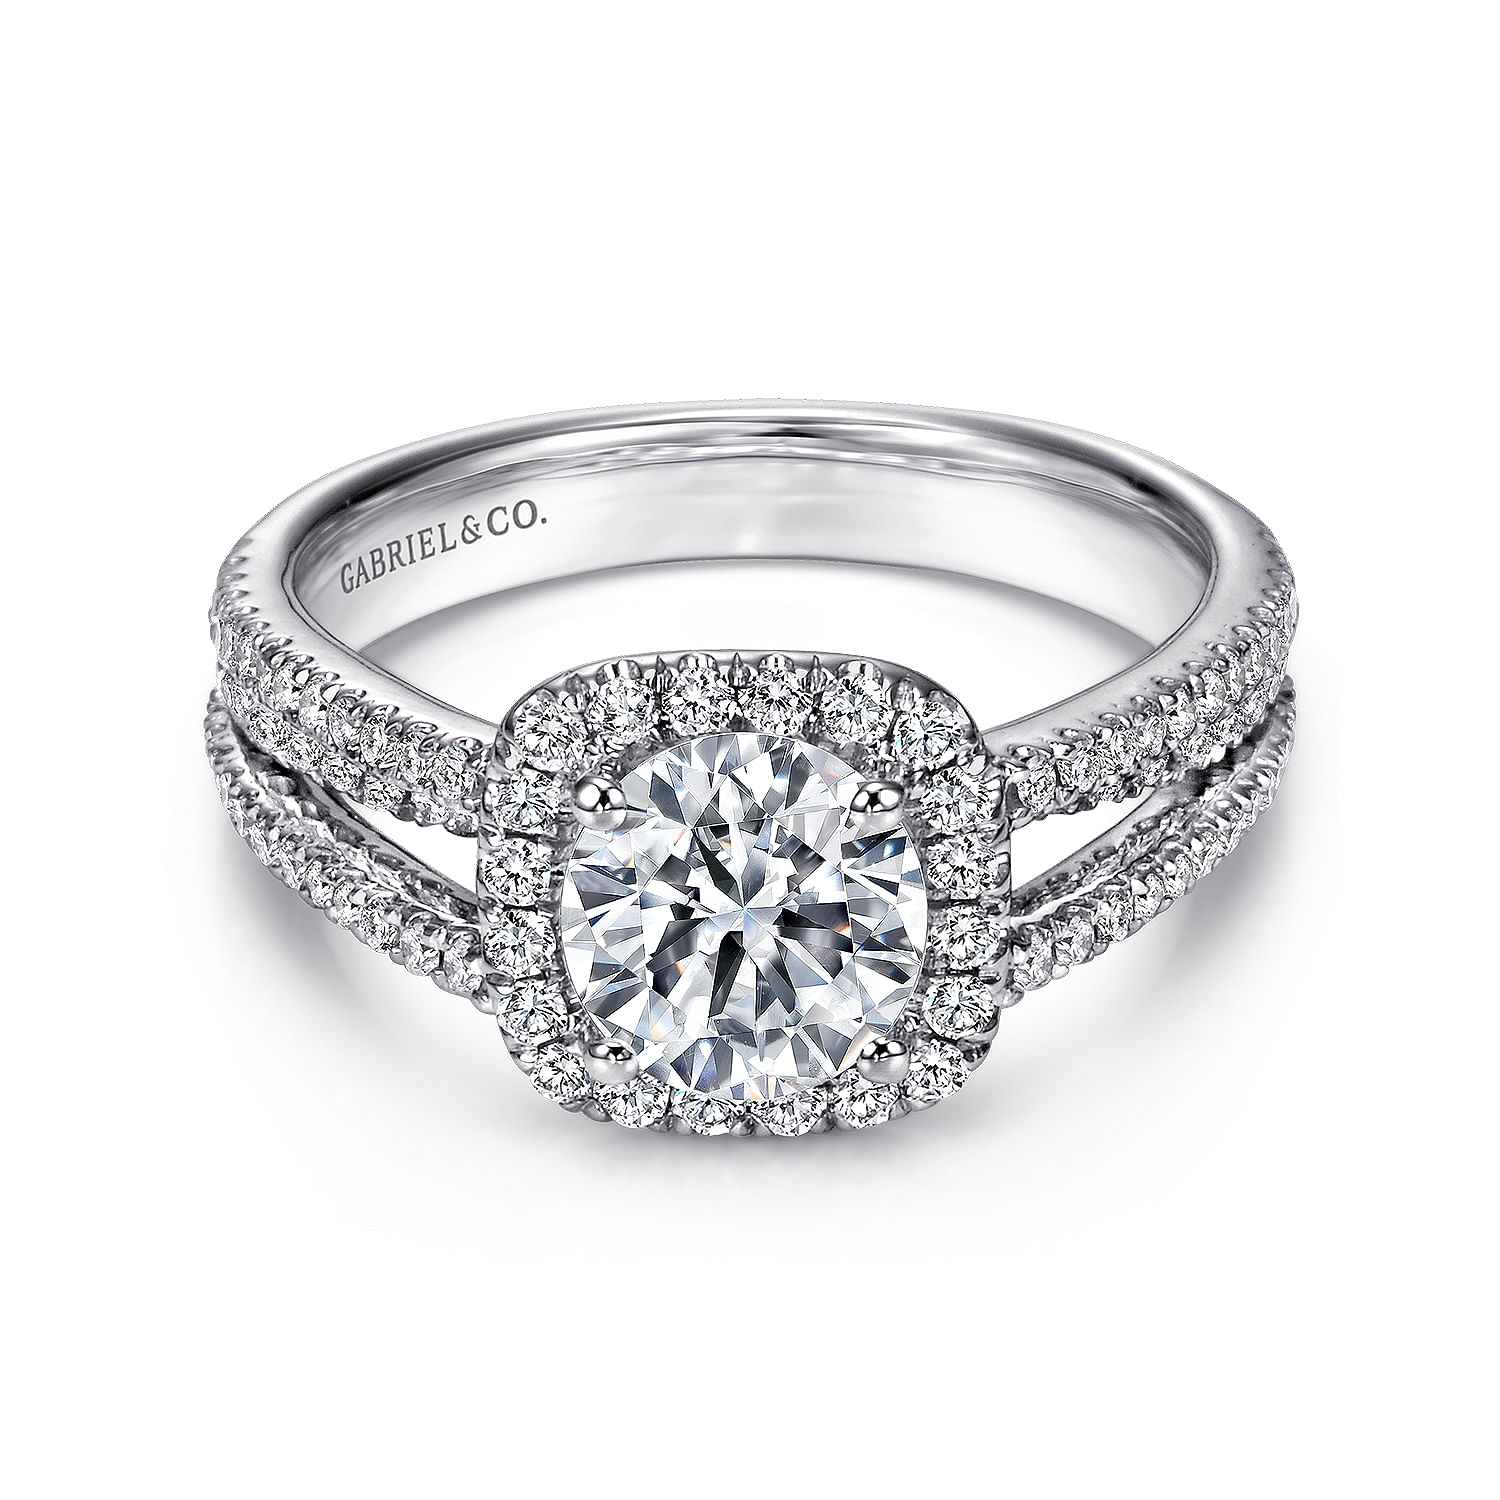 Hillary - 14K White Gold Round Halo Diamond Engagement Ring